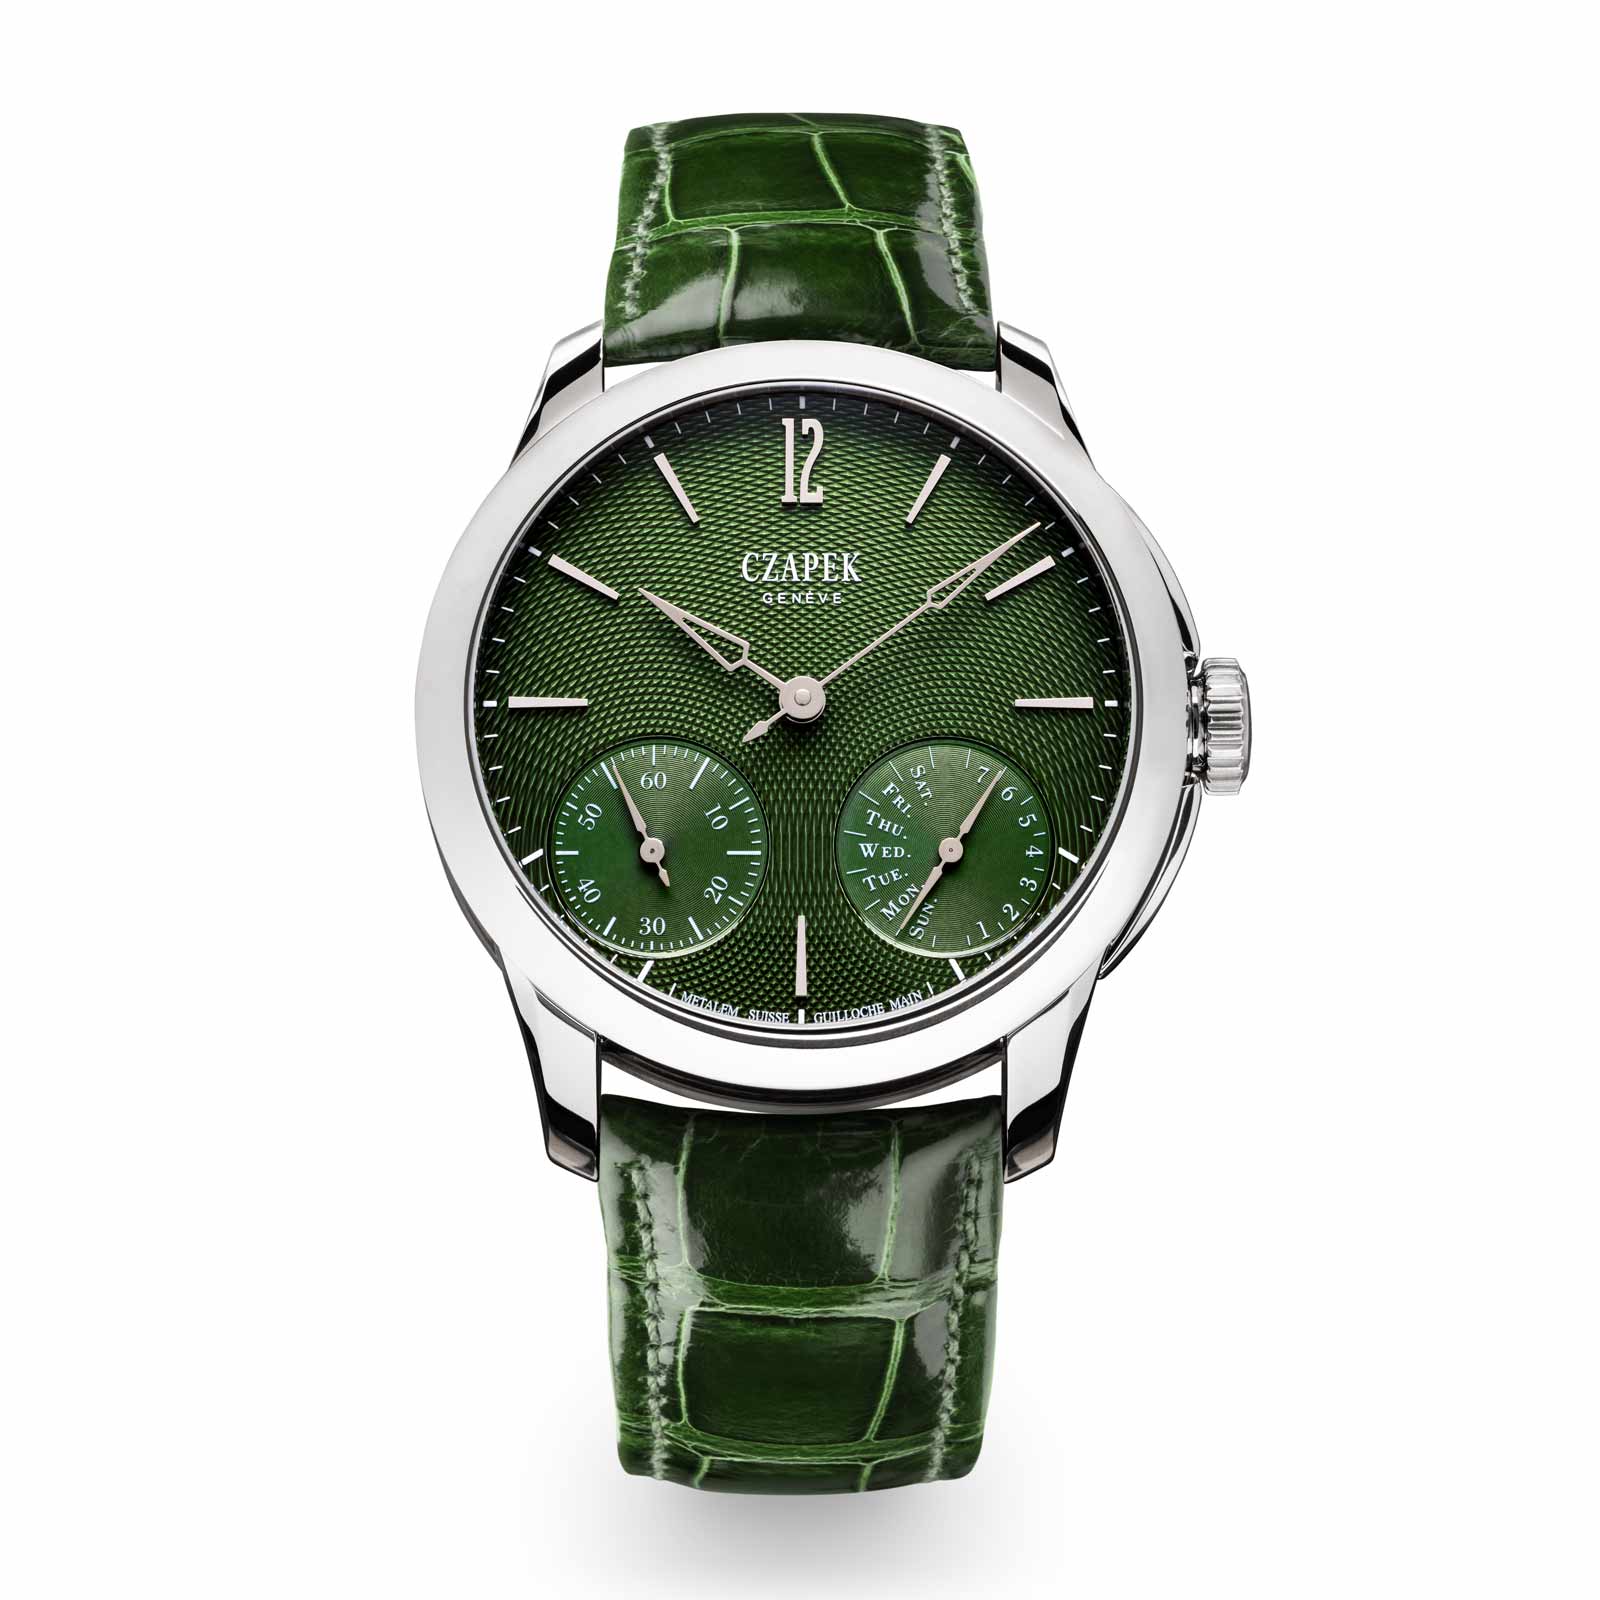 Trois montres vertes